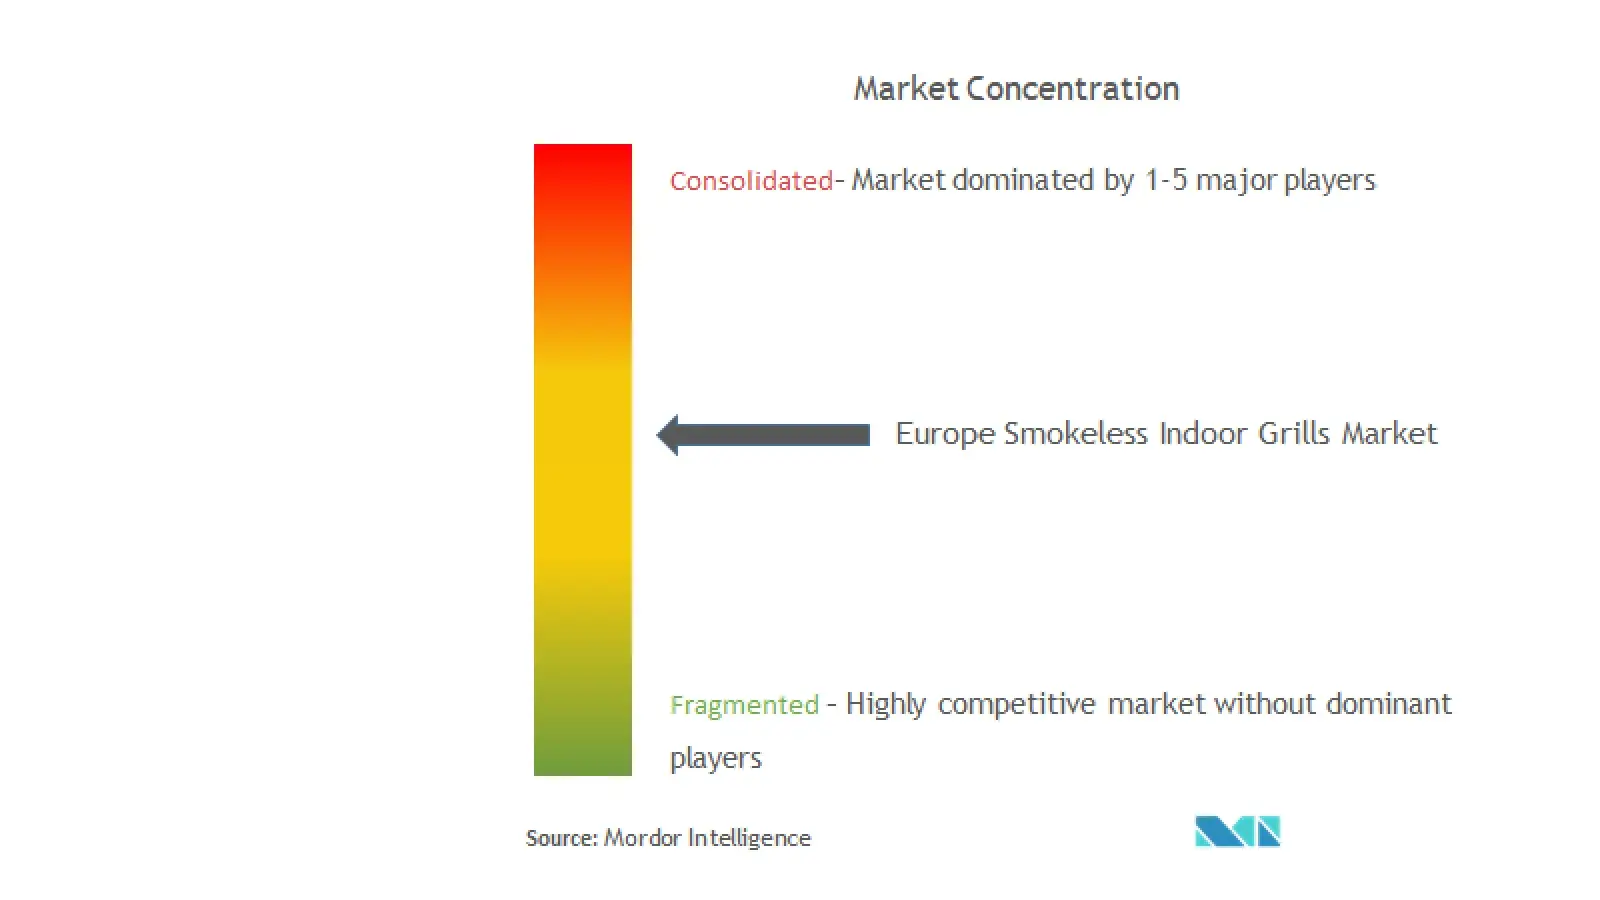 Europe Smokeless Indoor Grills Market  Concentration